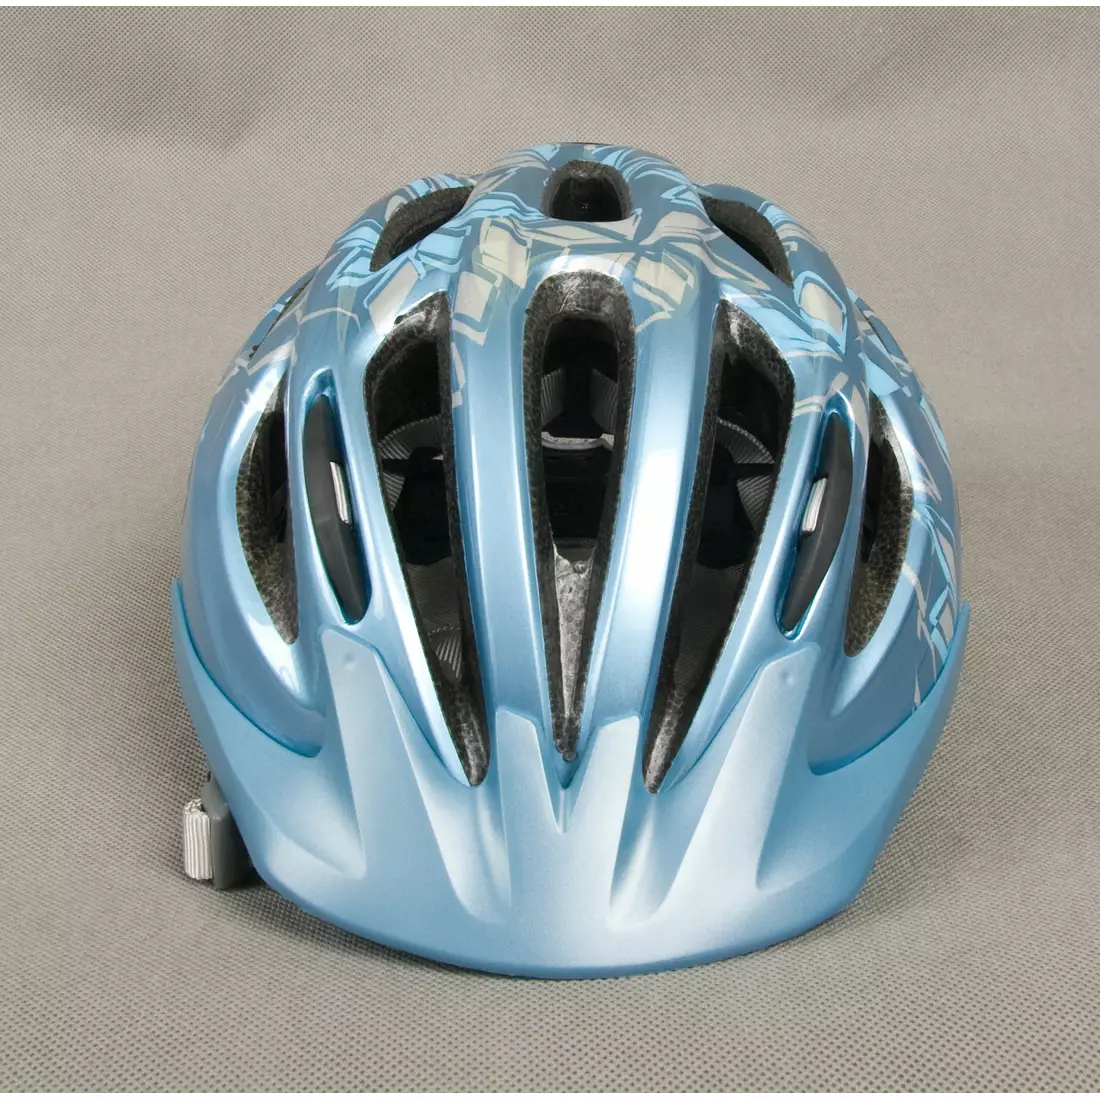 Casca de bicicleta dama GIRO VENUS II, culoare: Albastru si alb